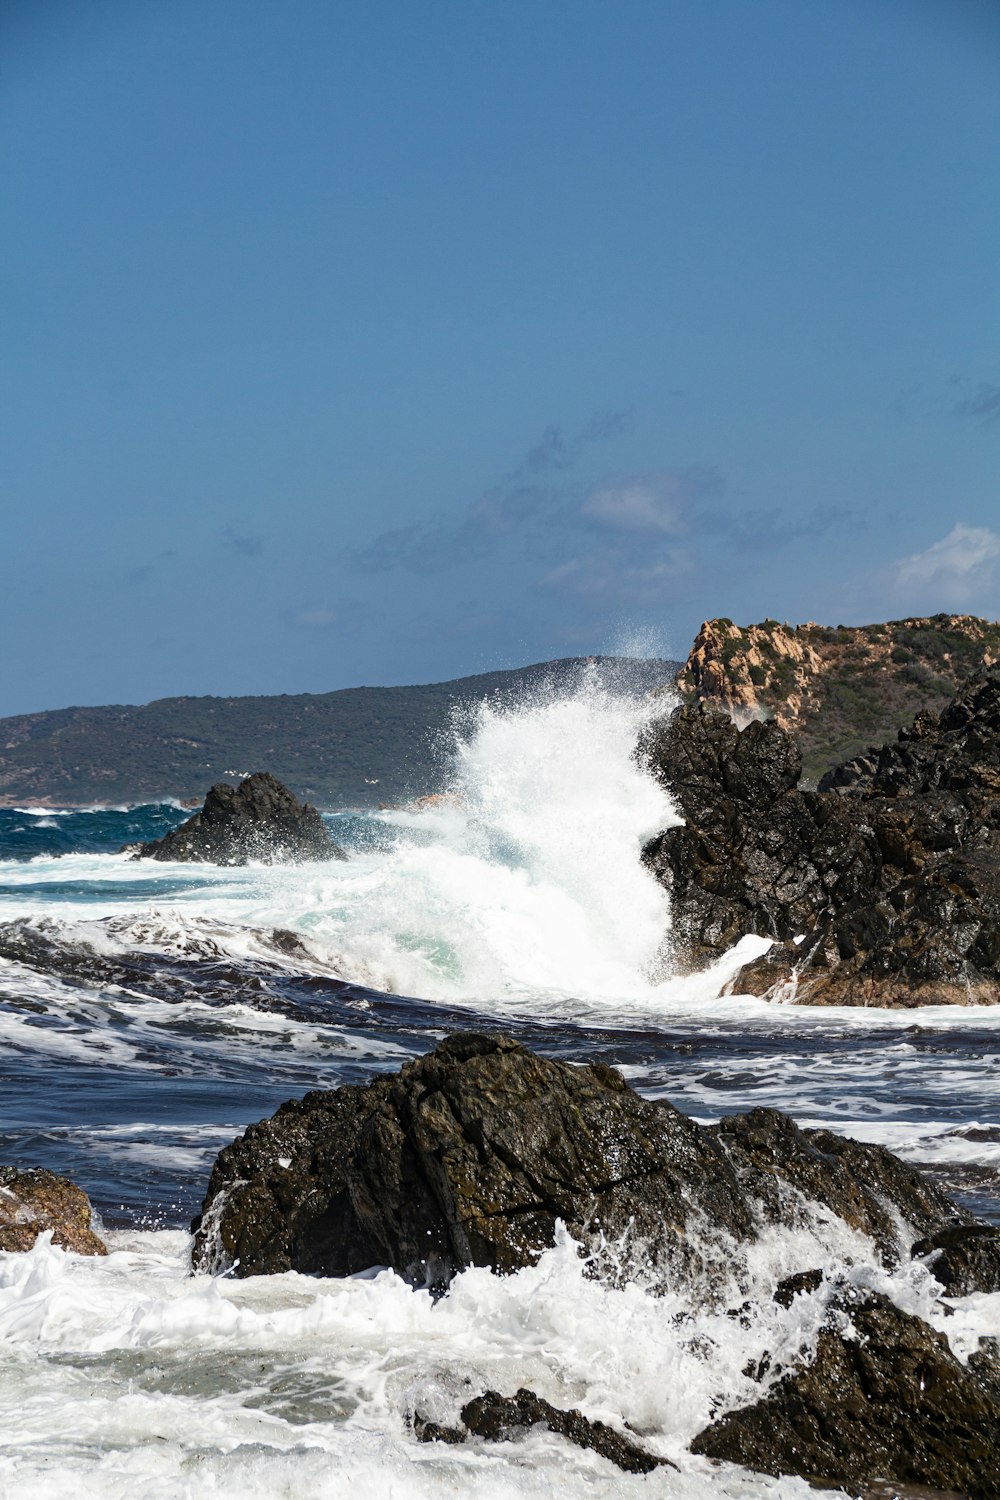 ocean waves crashing on rocky shore during daytime